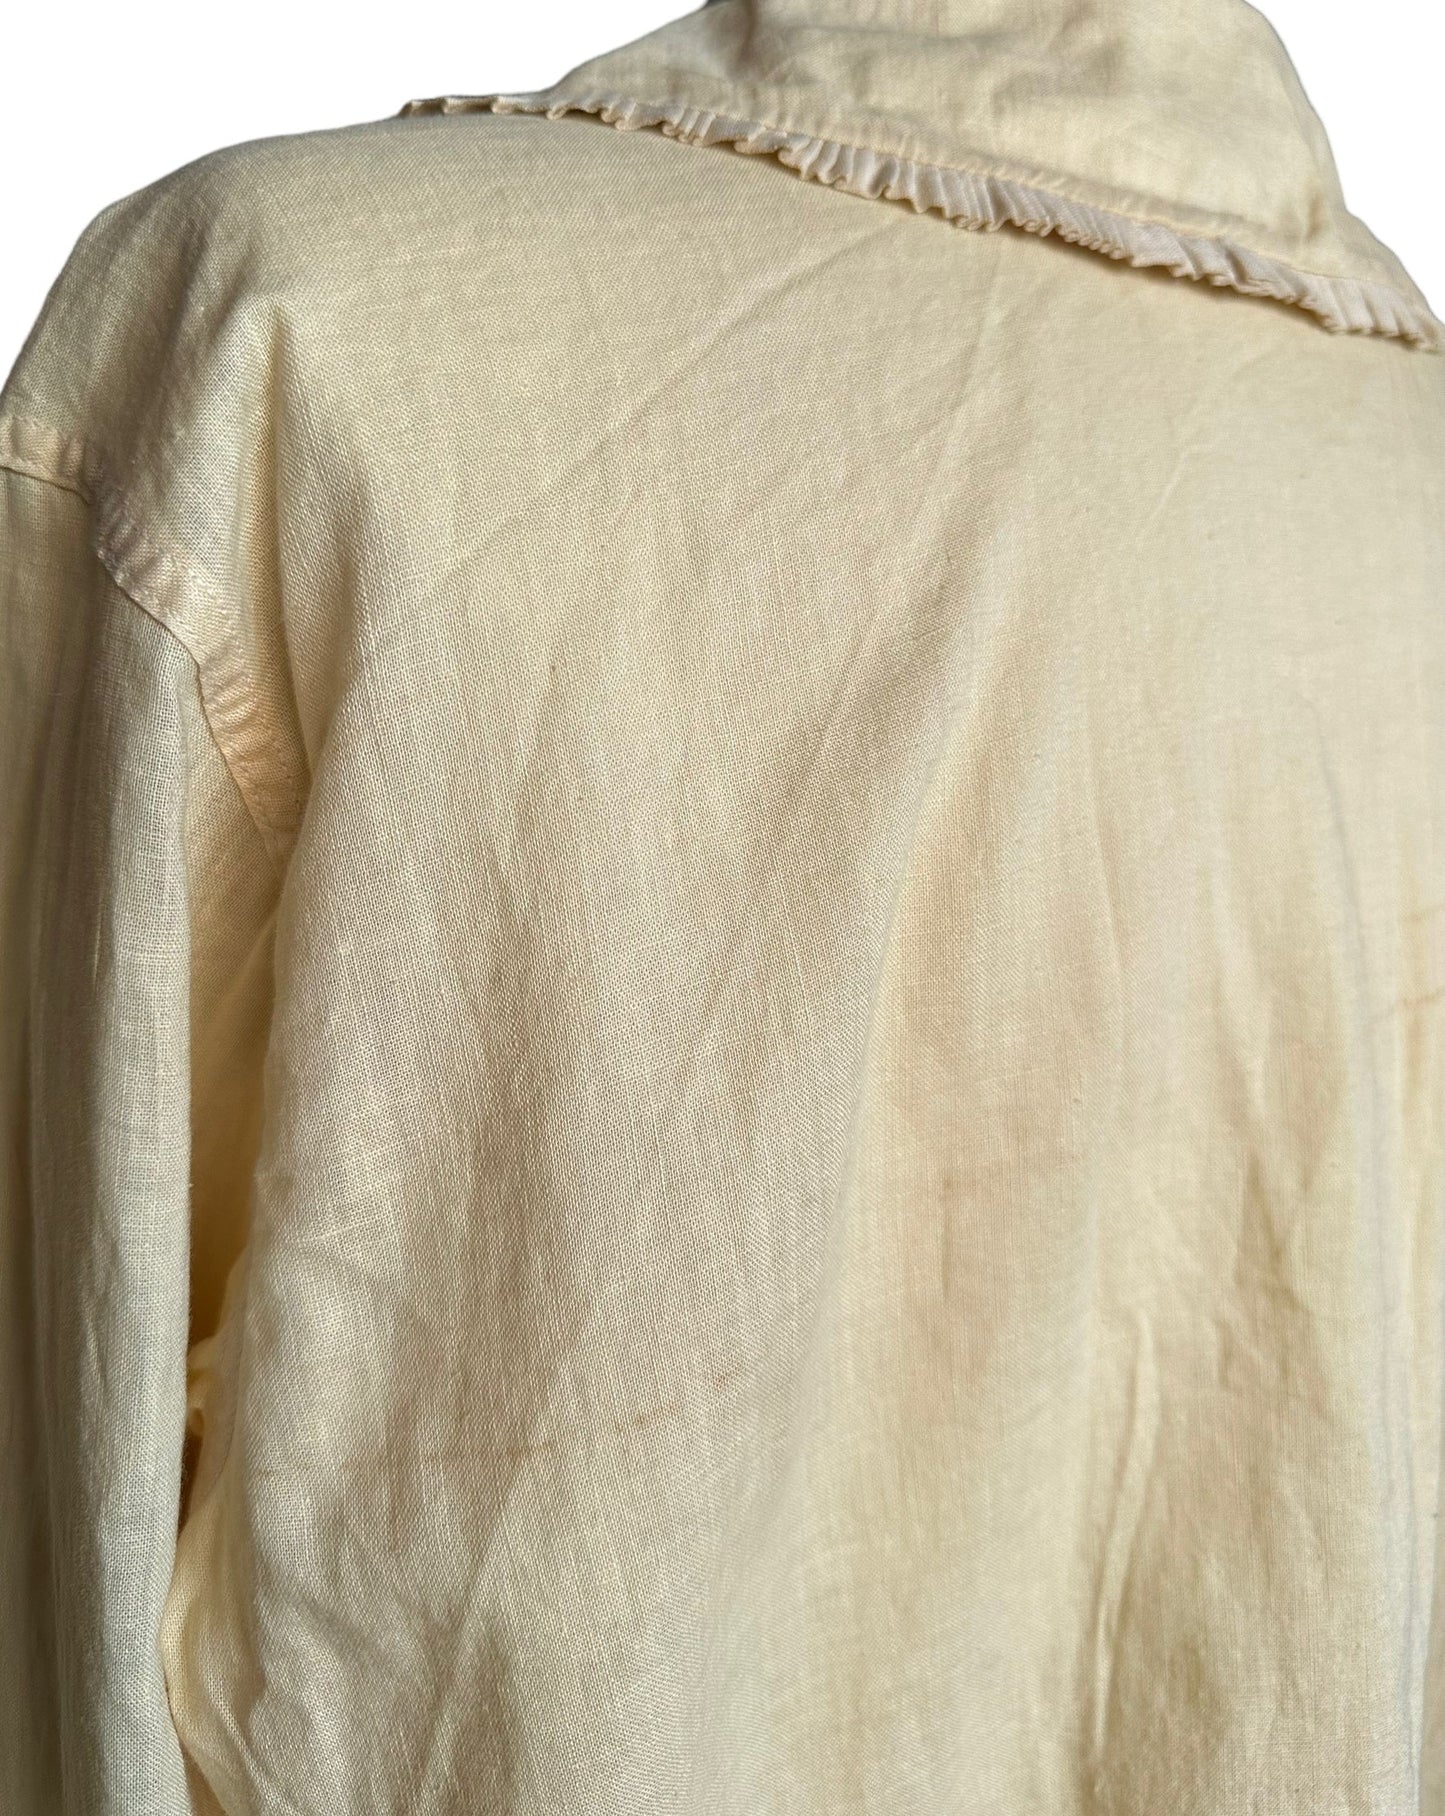 Back left shoulder Early 1900s Antique Linen Blouse | Seattle Antique Clothing | Barn Owl True Vintage